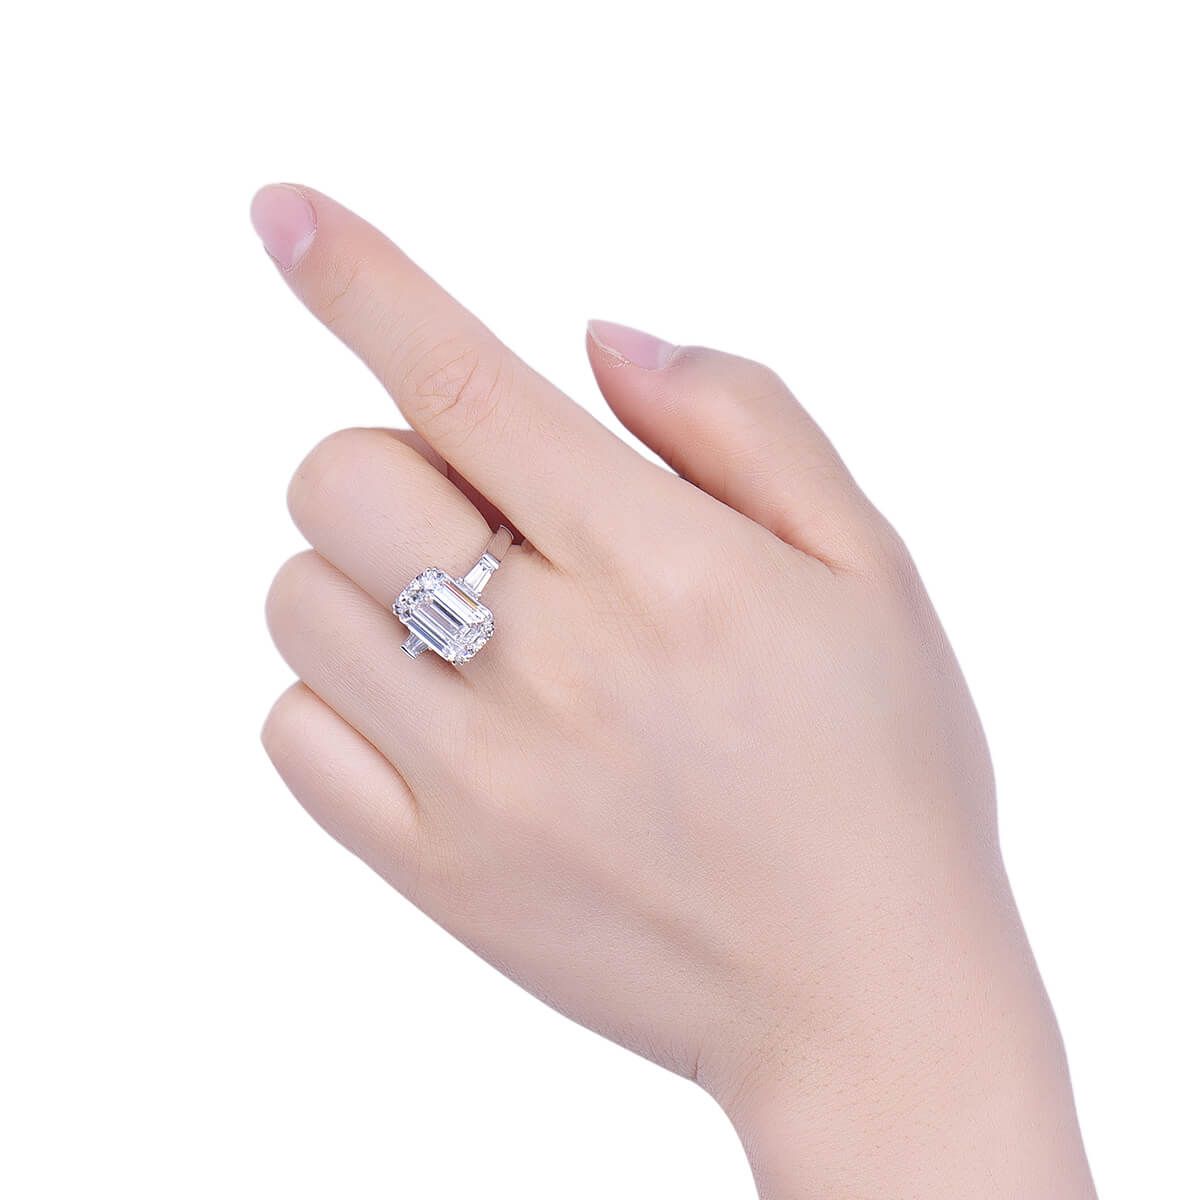 White Diamond Ring, 6.78 Ct. TW, Emerald shape, GIA Certified, 2155170379